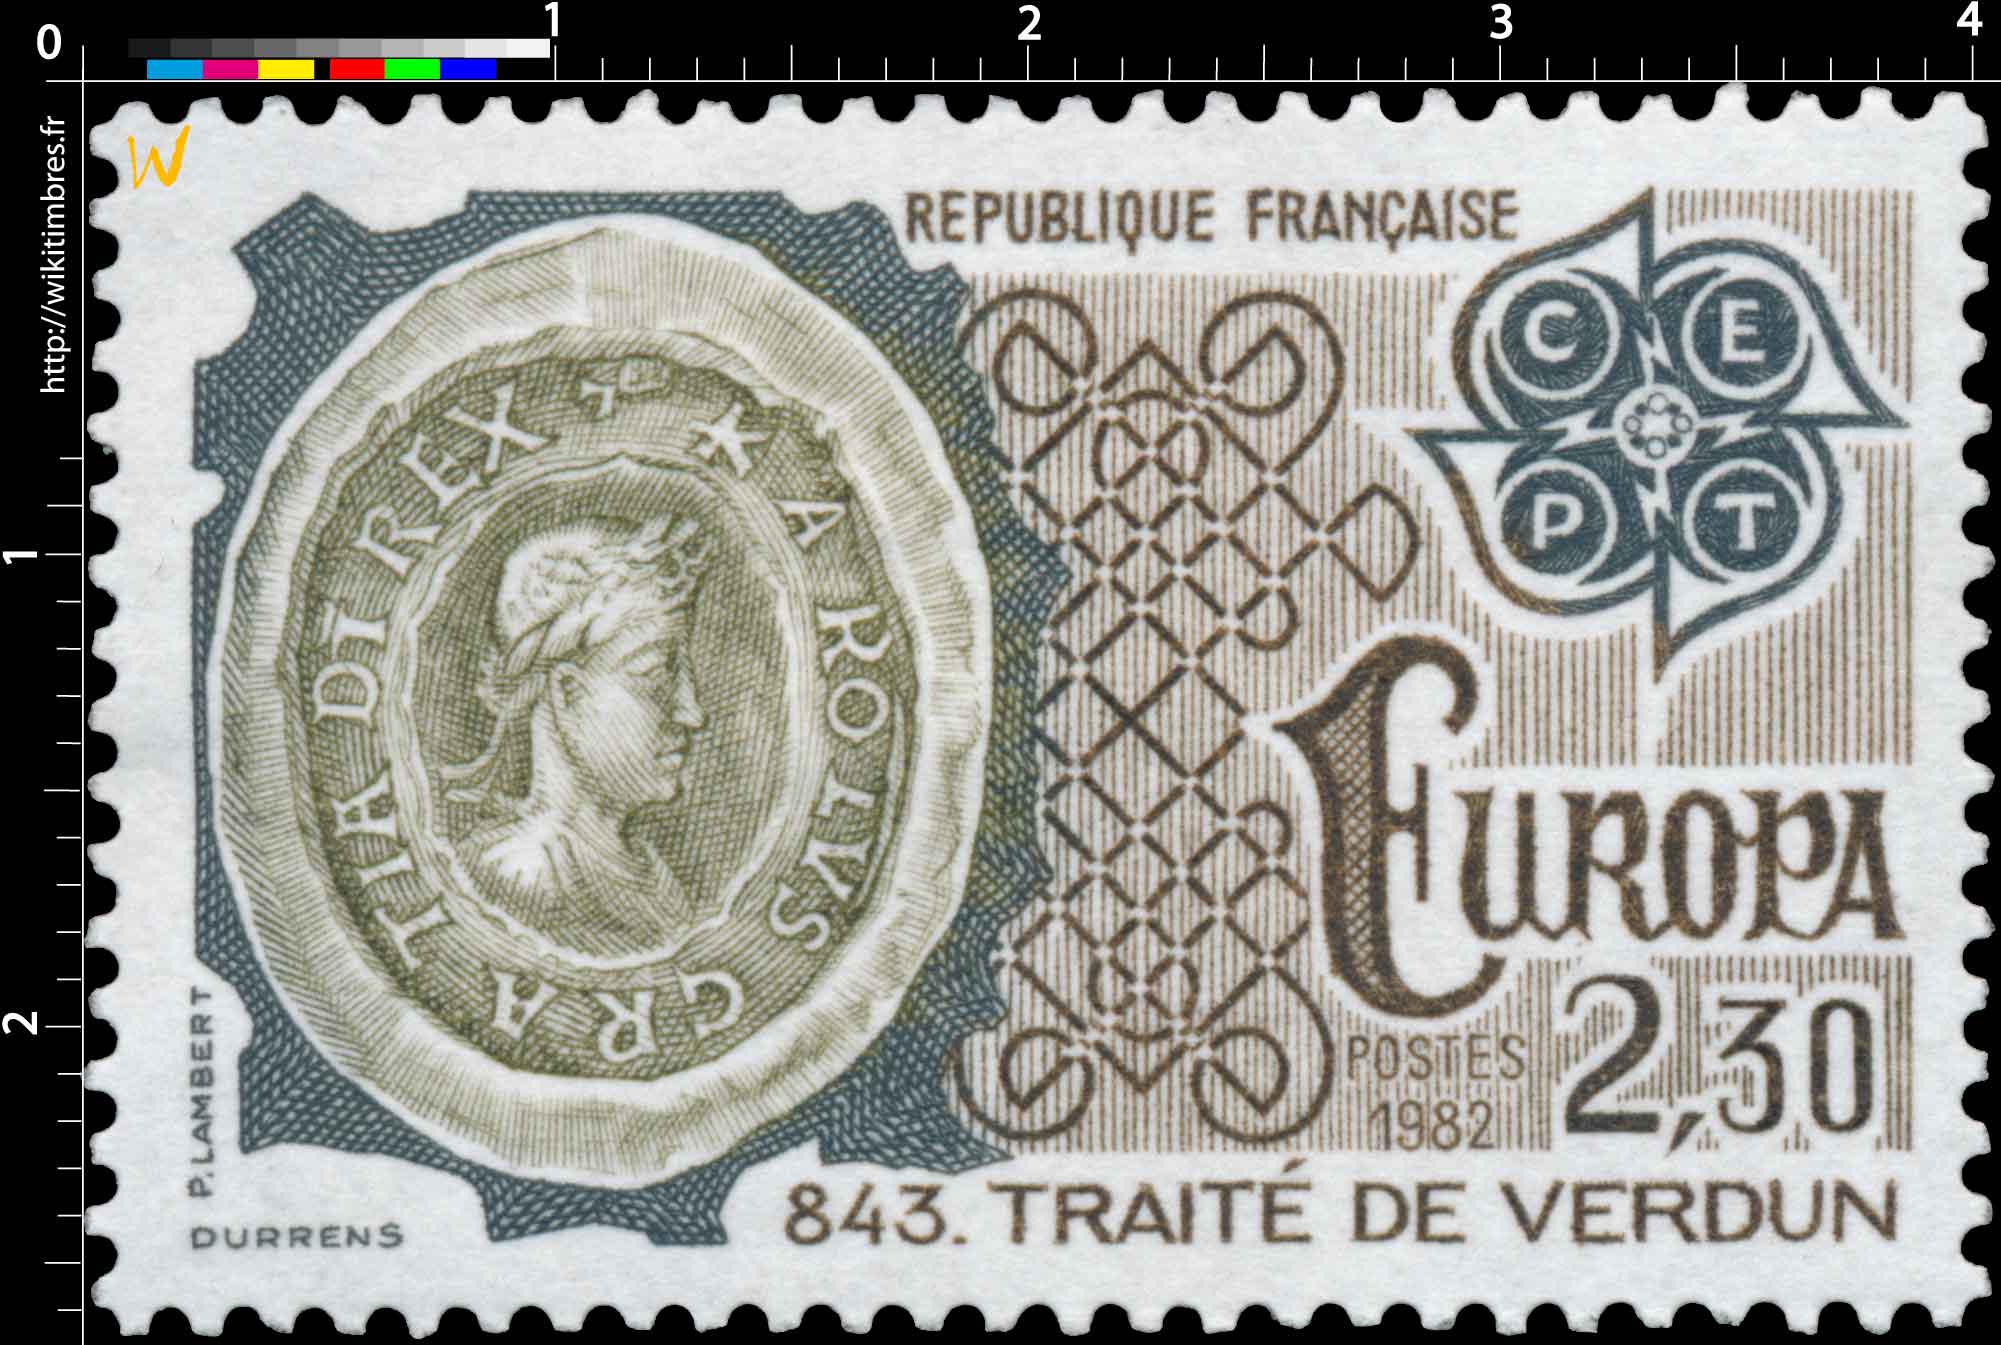 1982 EUROPA CEPT 843. TRAITÉ DE VERDUN KAROLUS CRATIA DI REX